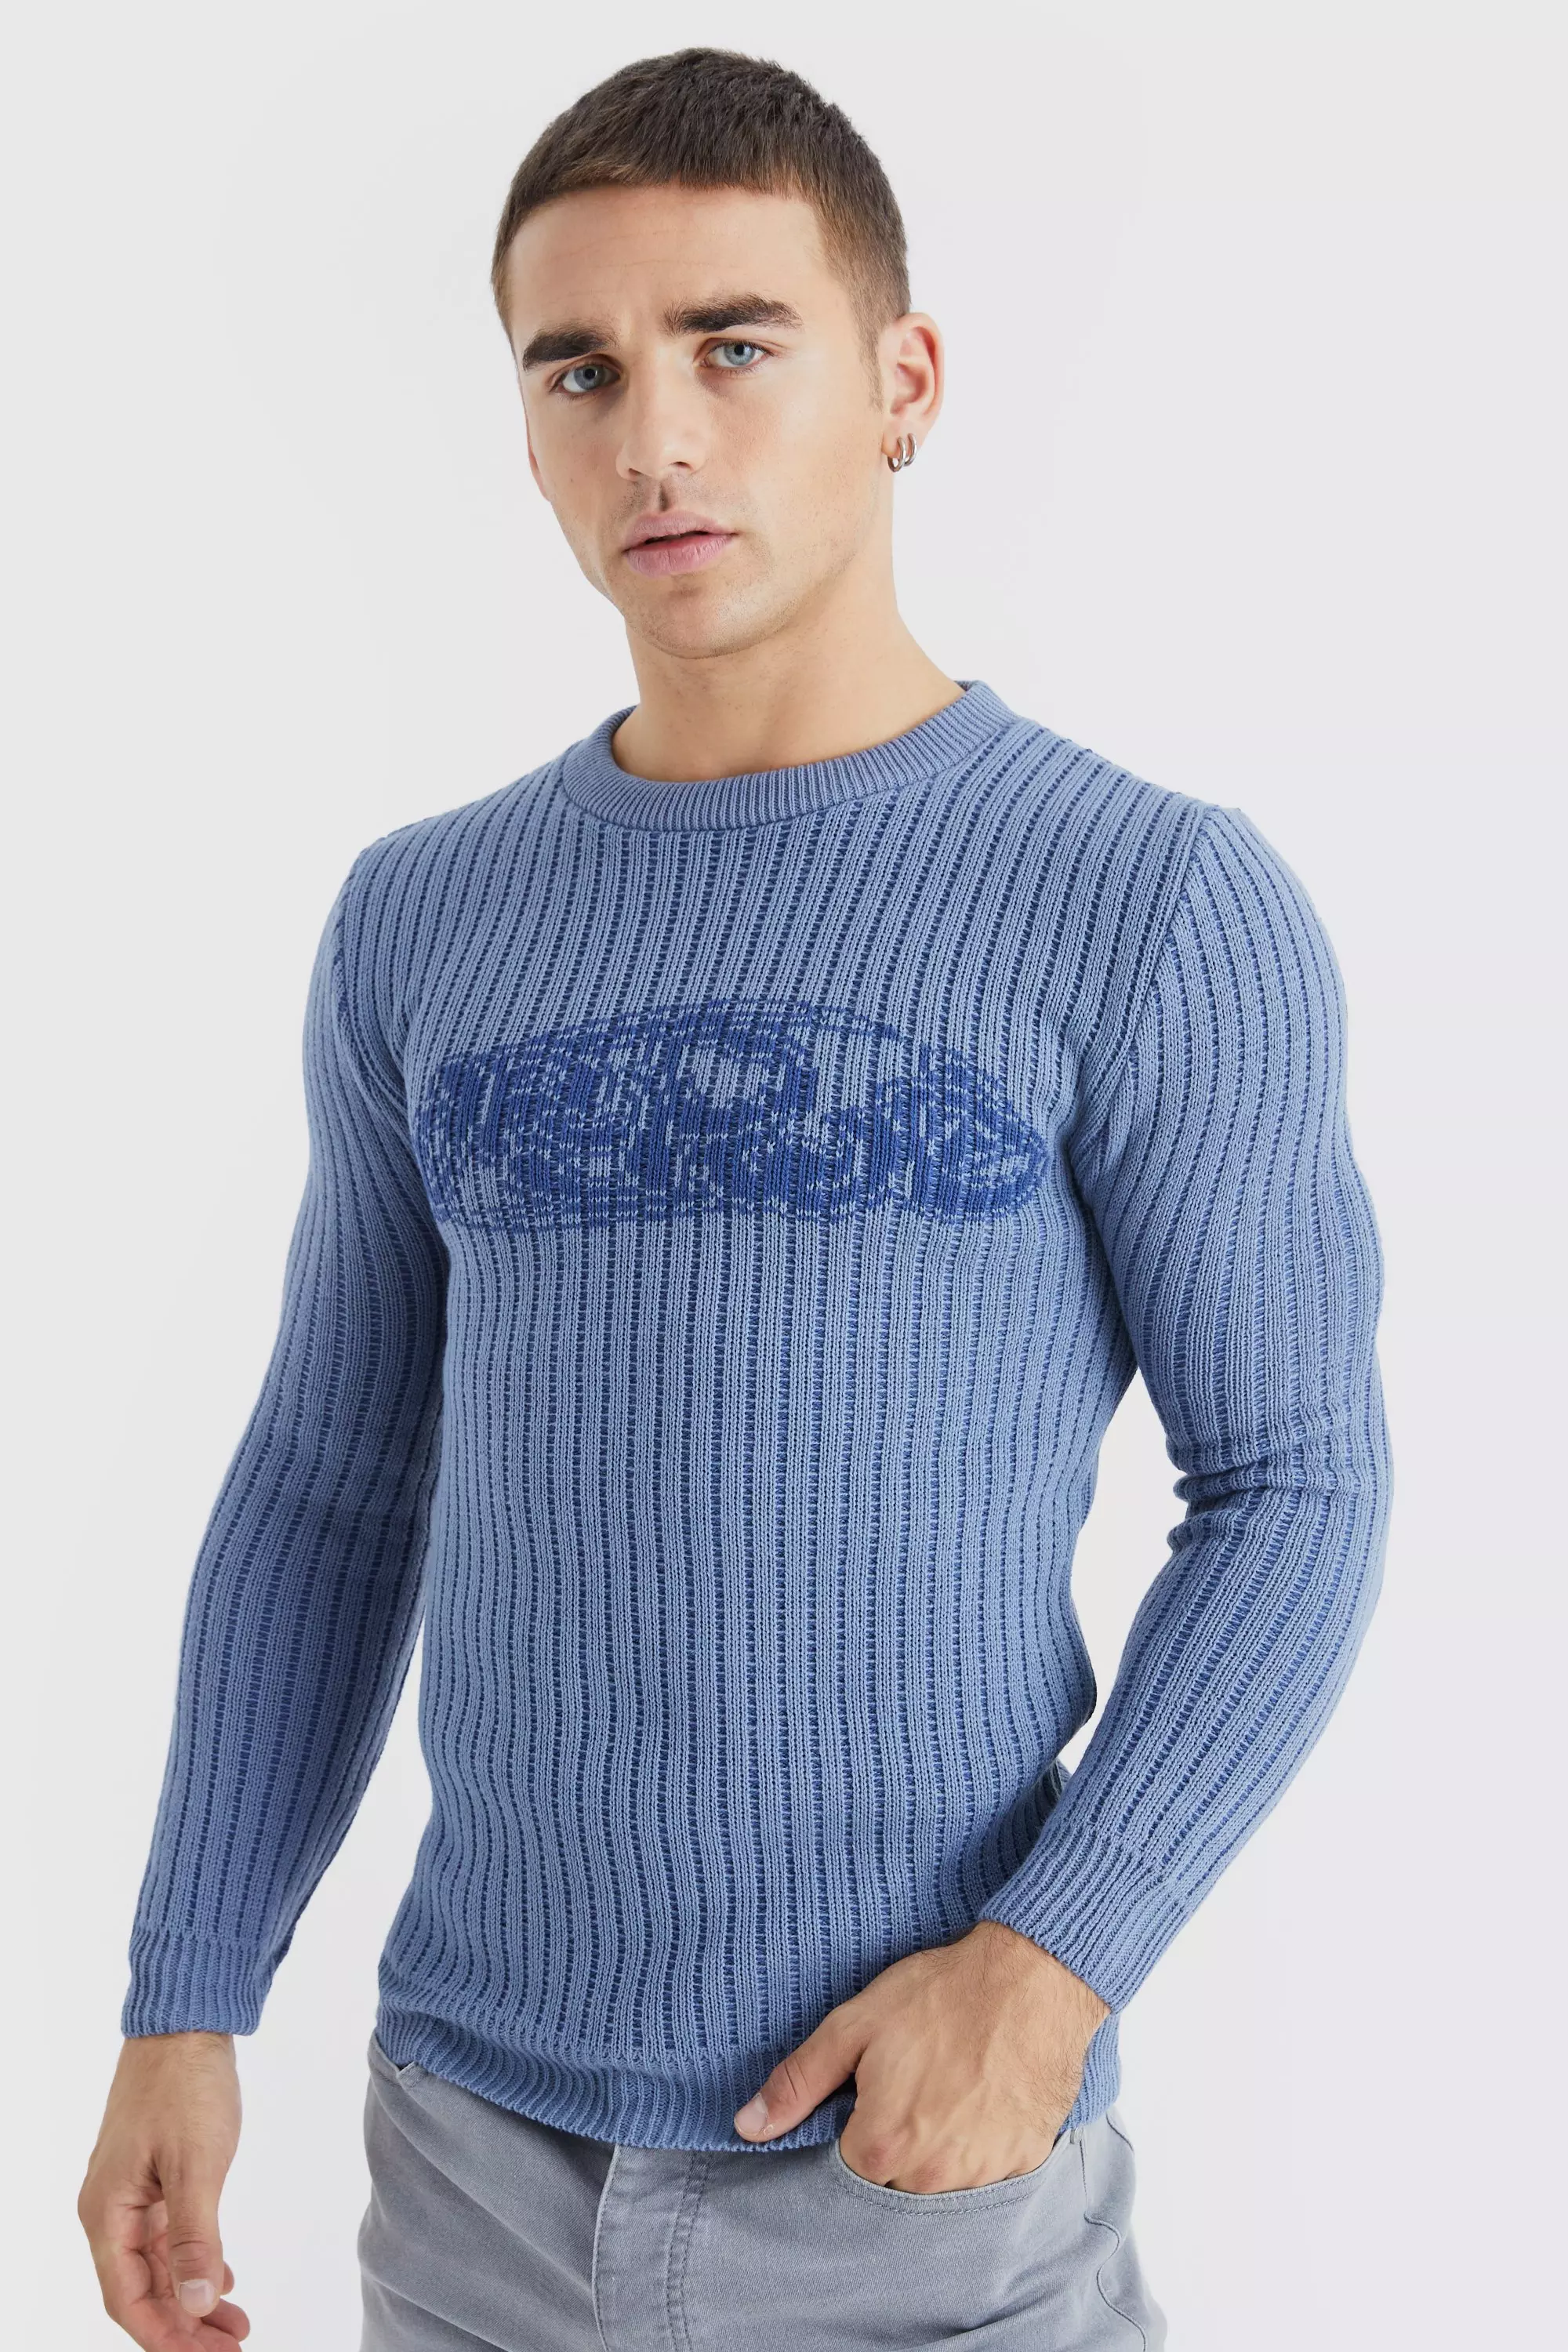 Muscle Fit 2 Tone Rib Worldwide Sweater Blue